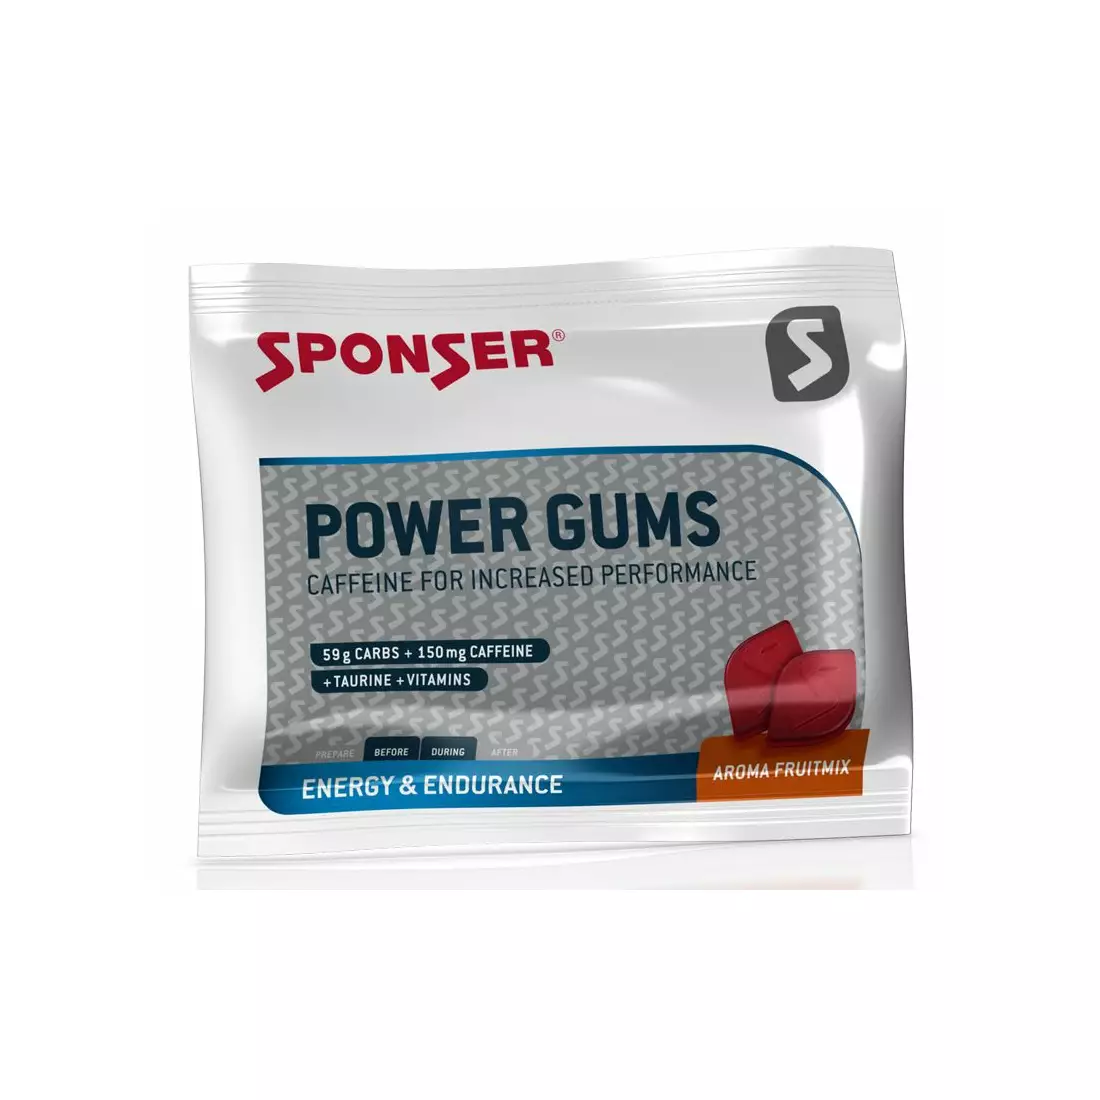 Energy gums SPONSER POWER GUMS fruit mix 75g pack 